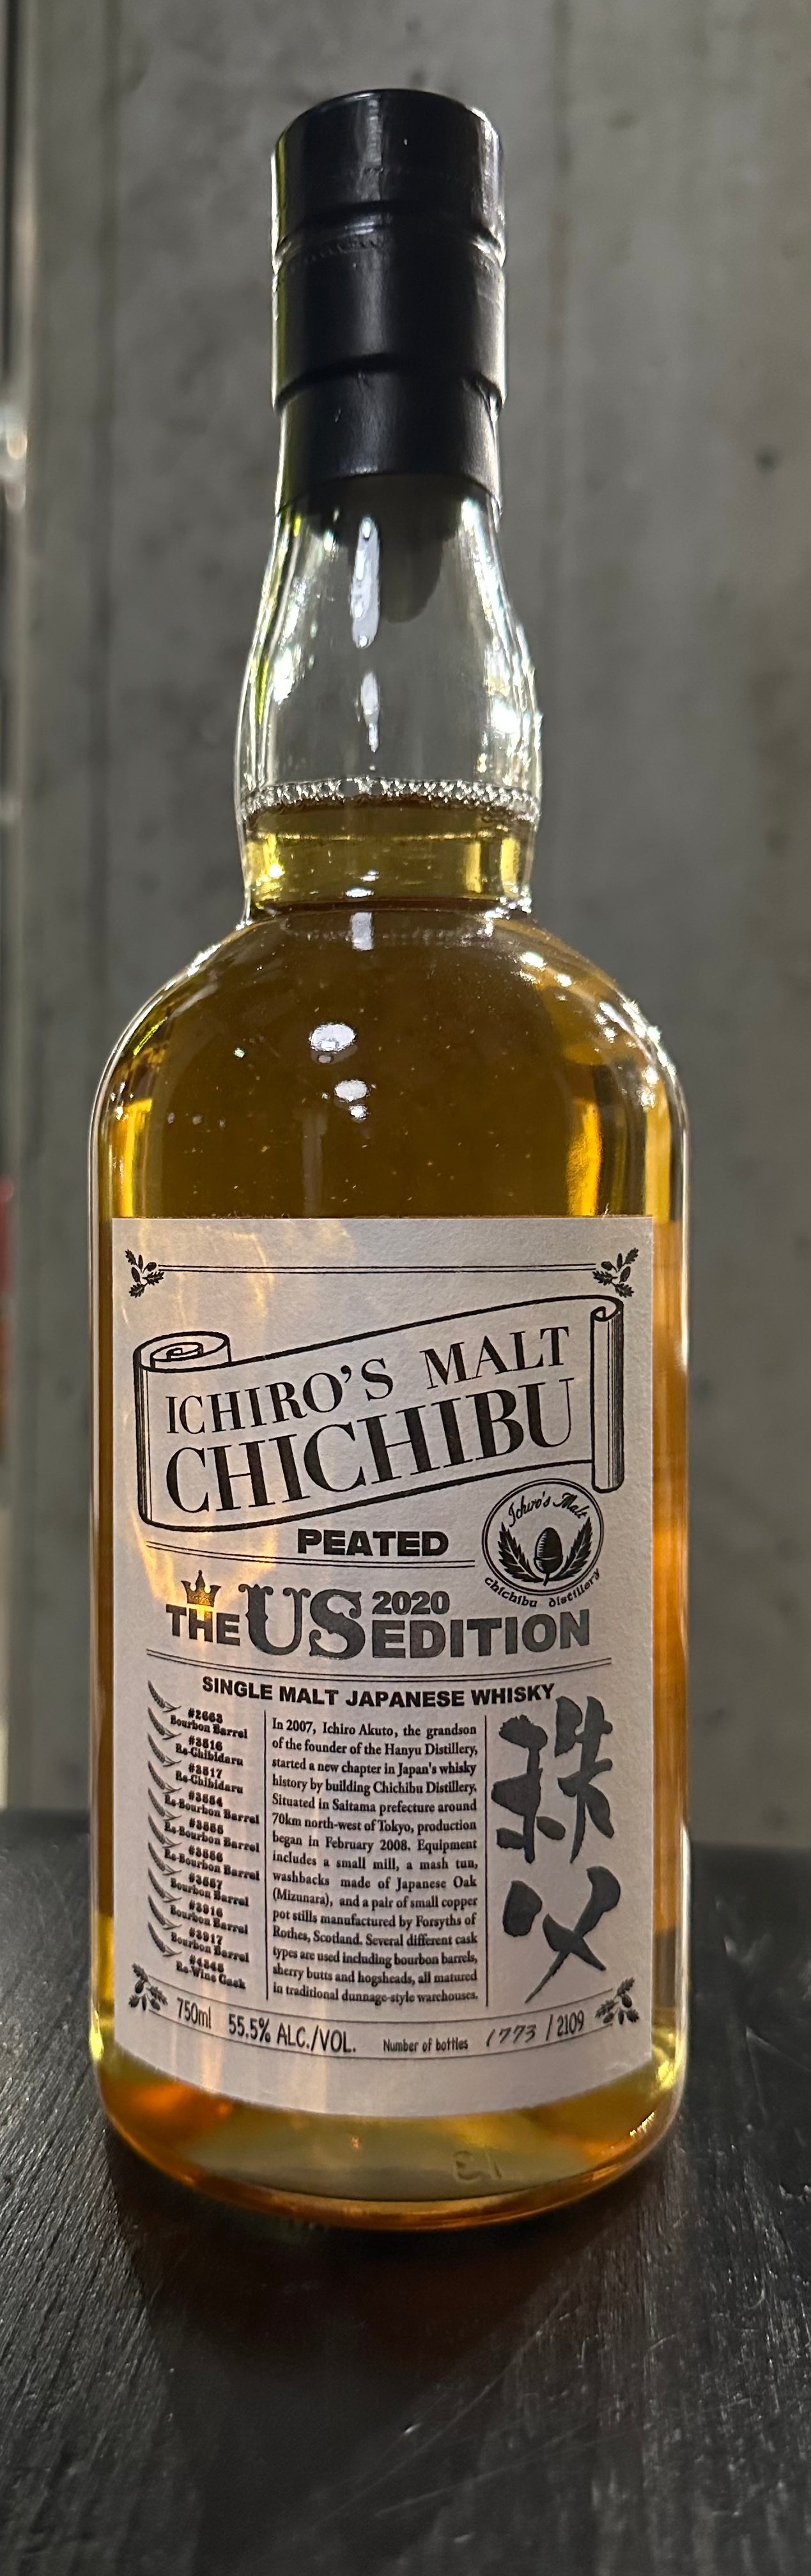 Ichiro's Single Malt Whisky "The US Edition" 2020